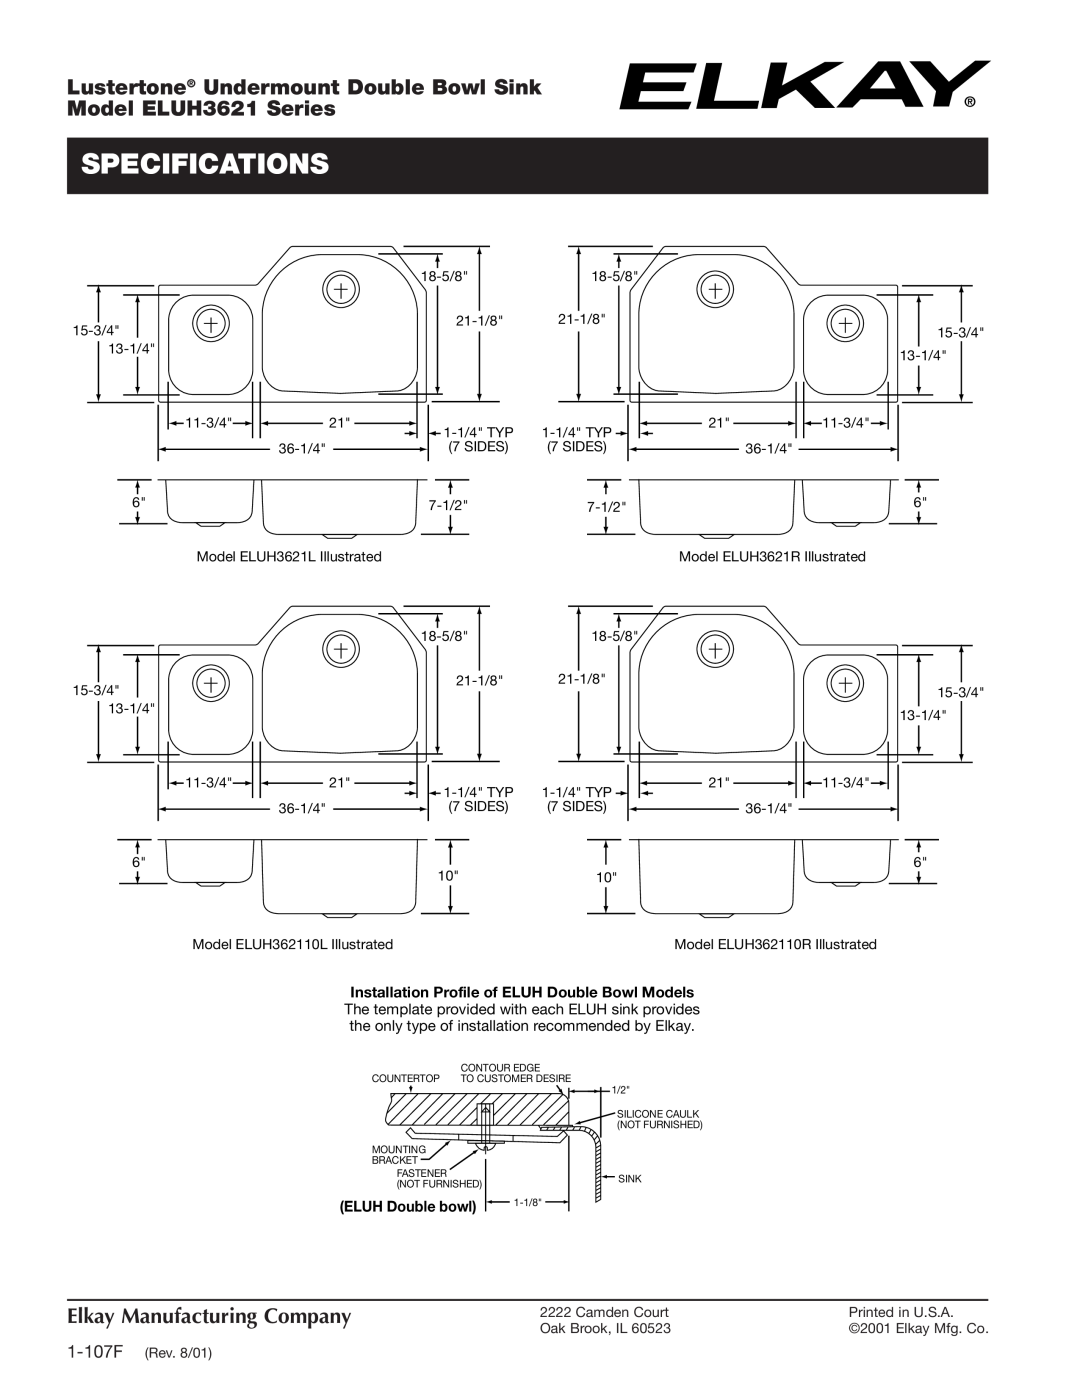 Elkay Specifications, Lustertone Undermount Double Bowl Sink, Model ELUH3621 Series, Elkay Manufacturing Company 